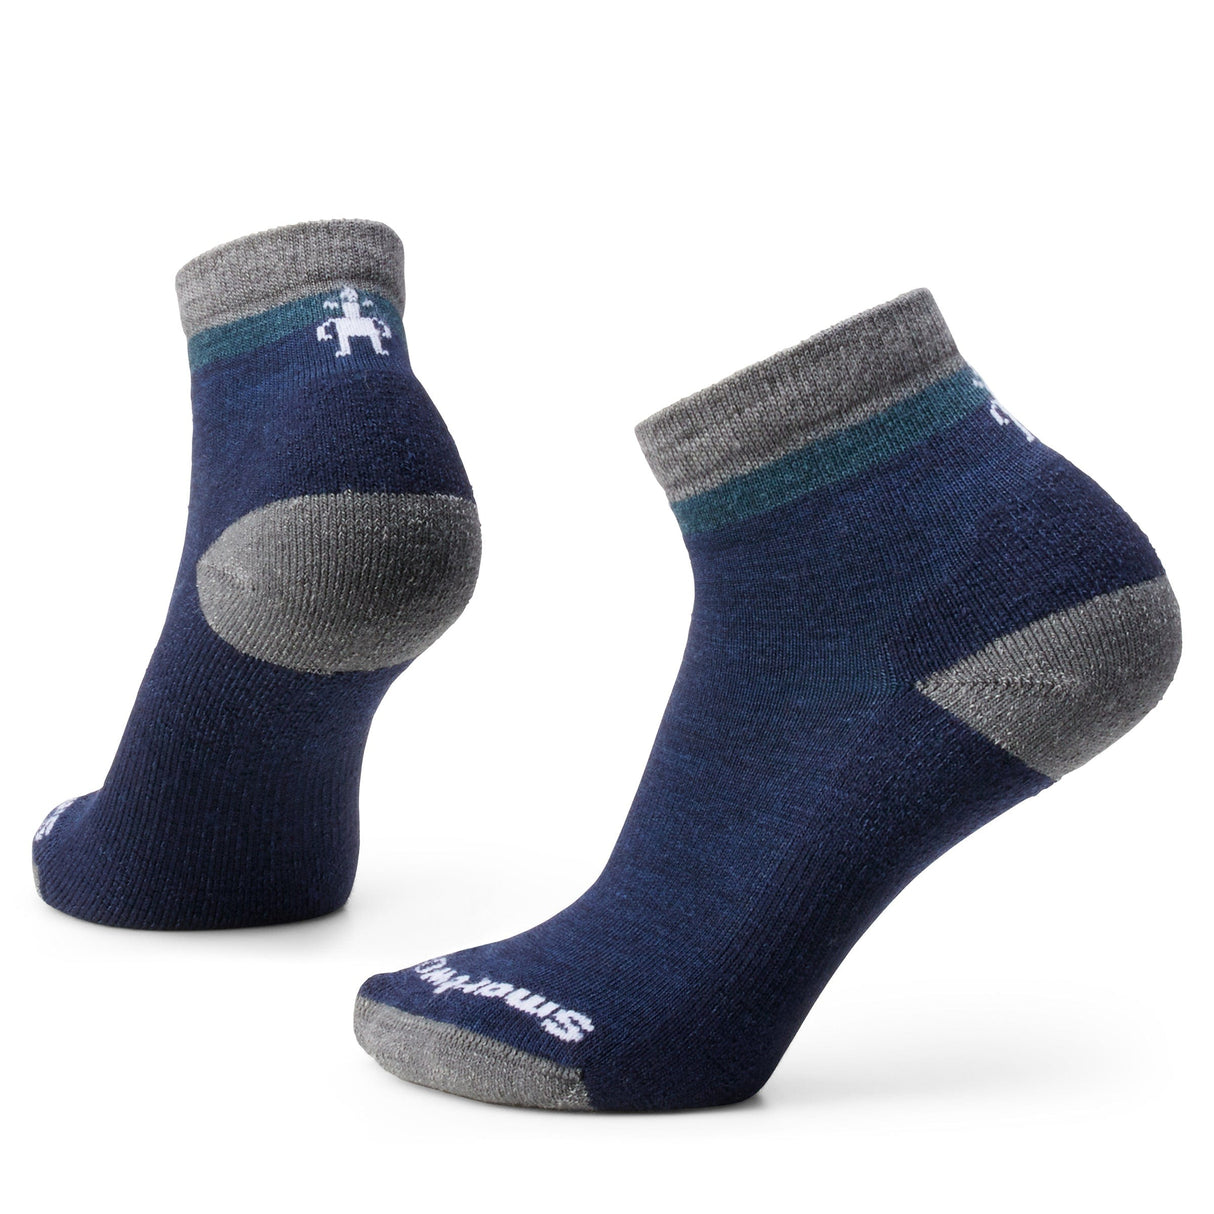 Smartwool Everyday Top Stripe Ankle Socks  -  Small / Deep Navy